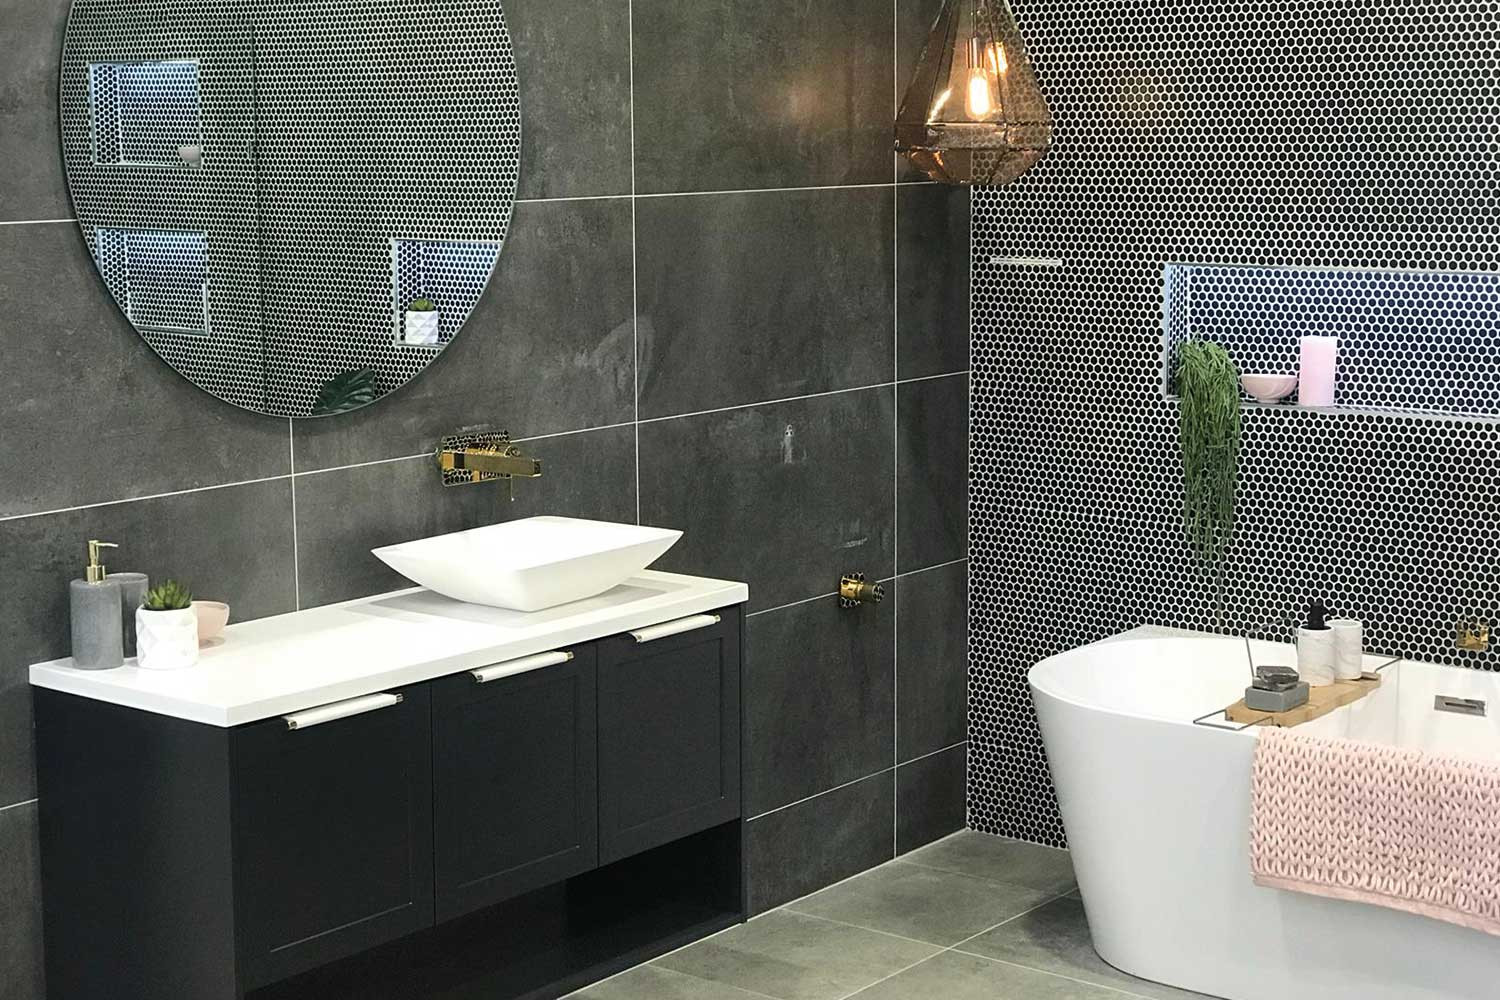 Latest Bathroom Design
 The latest modern bathroom designs to add luxe on a bud